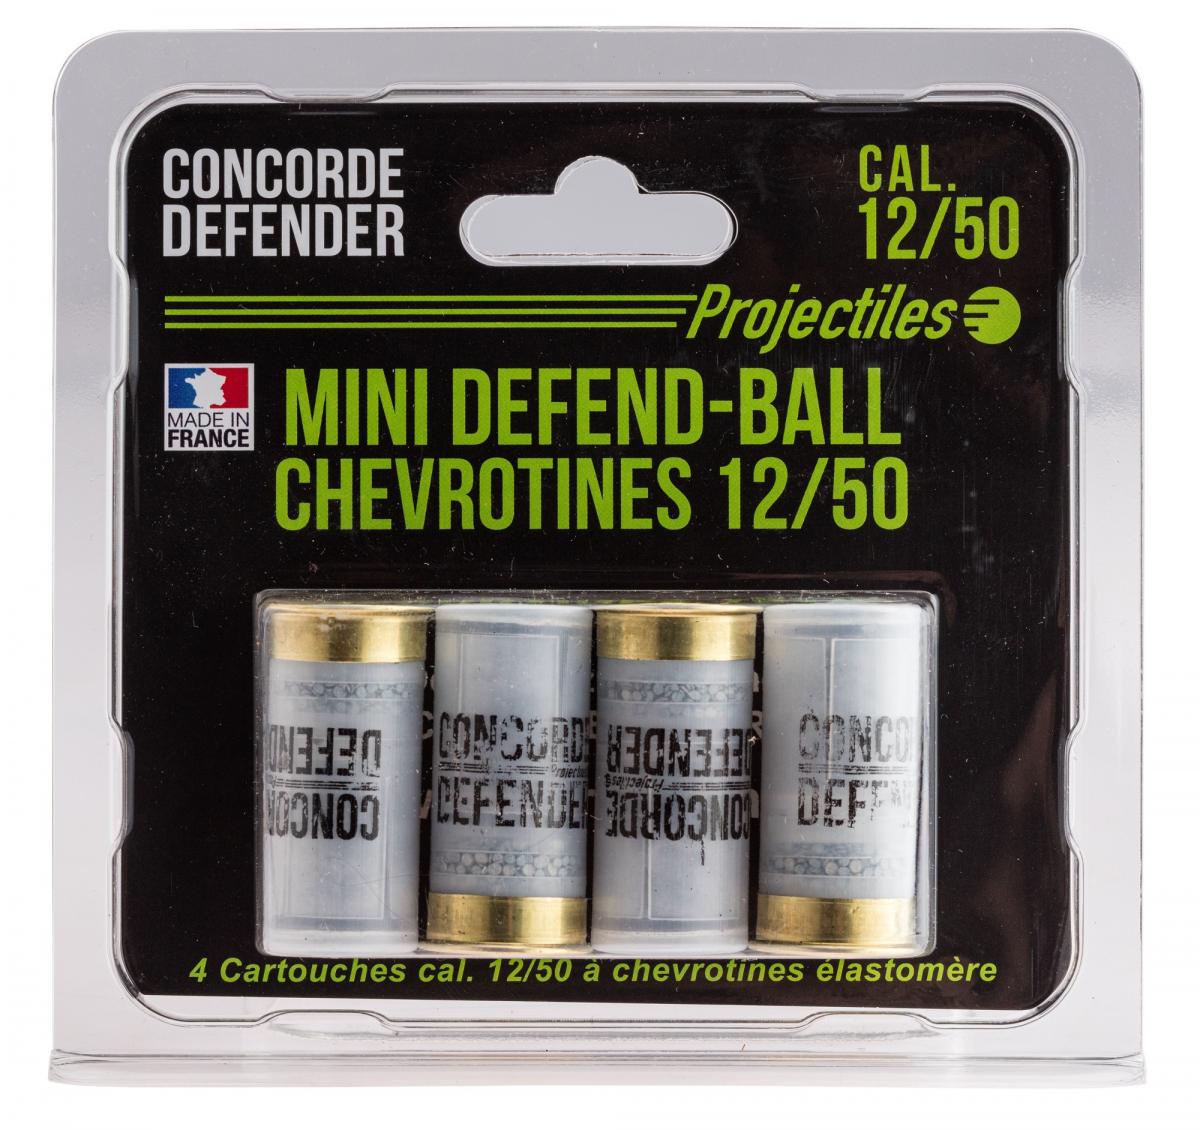 Cartouches Mini Defend-Ball cal. 12/50 chevrotine Elastomère - Blister de 4 